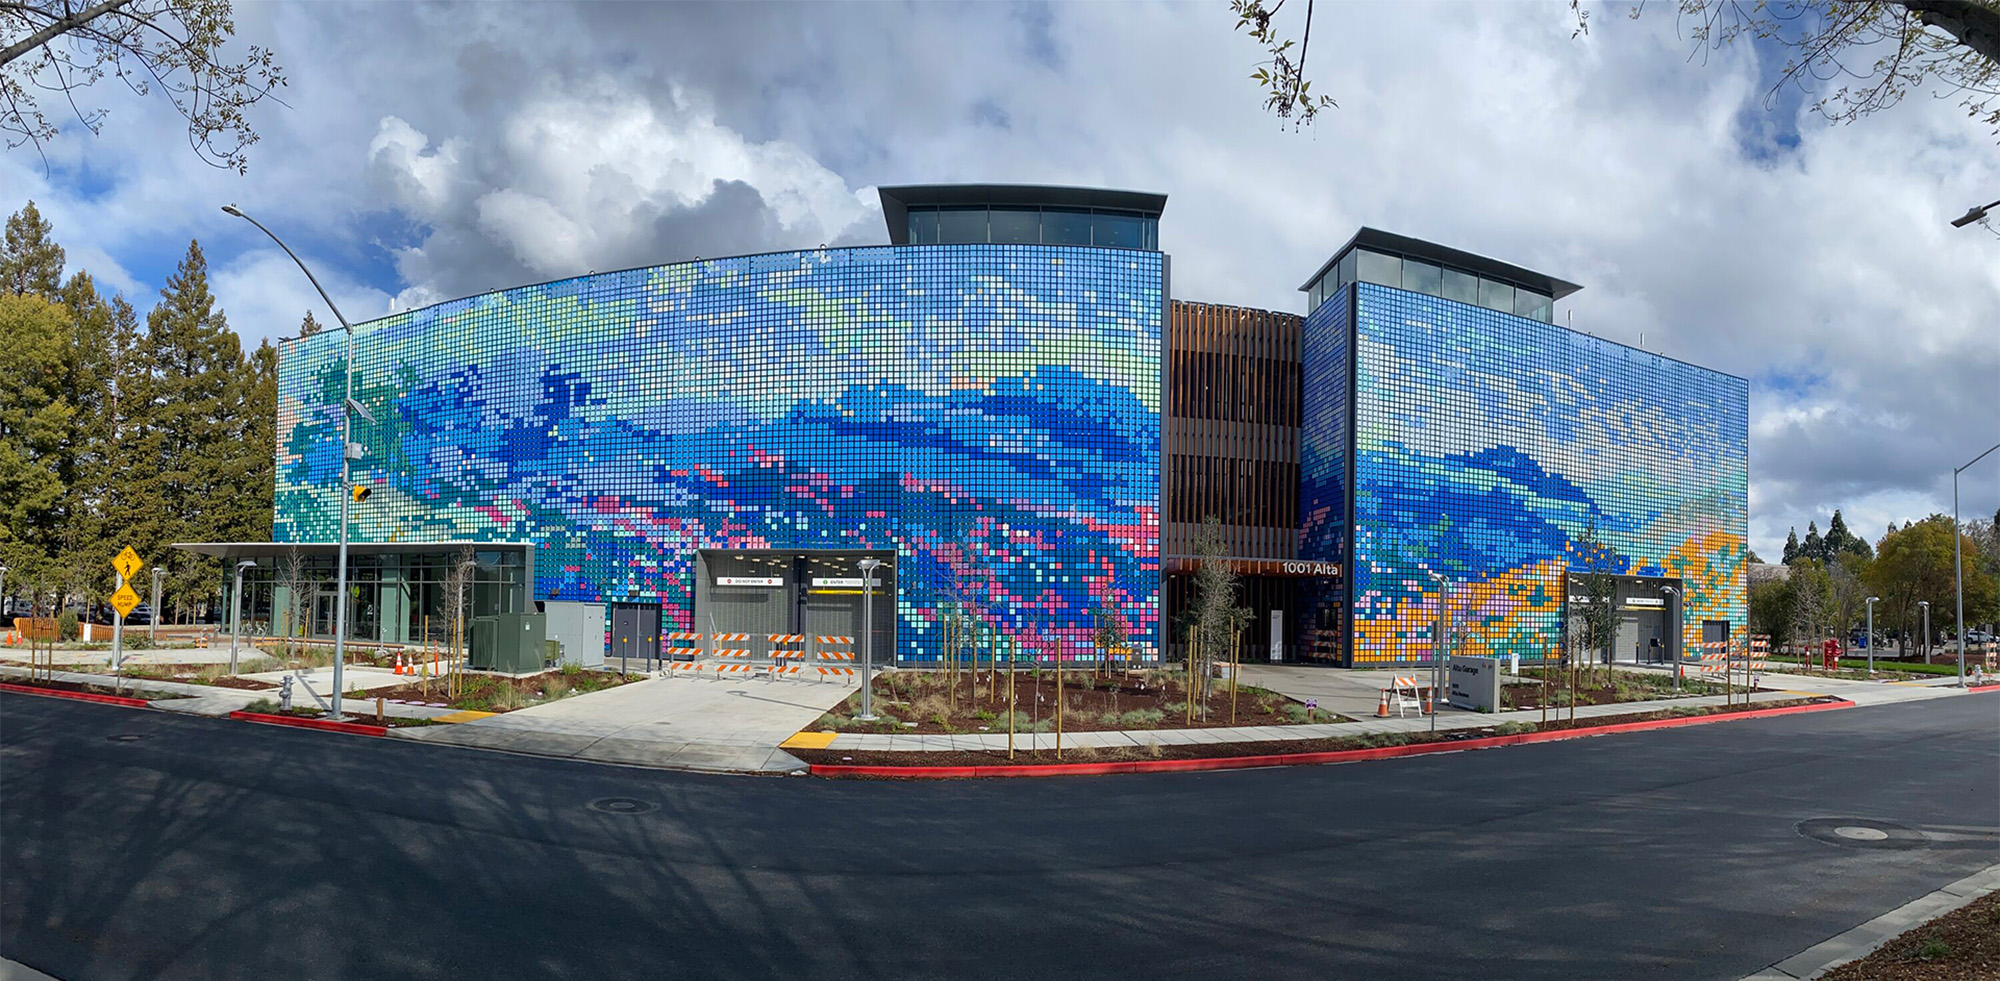 Moving mural parking garage in California